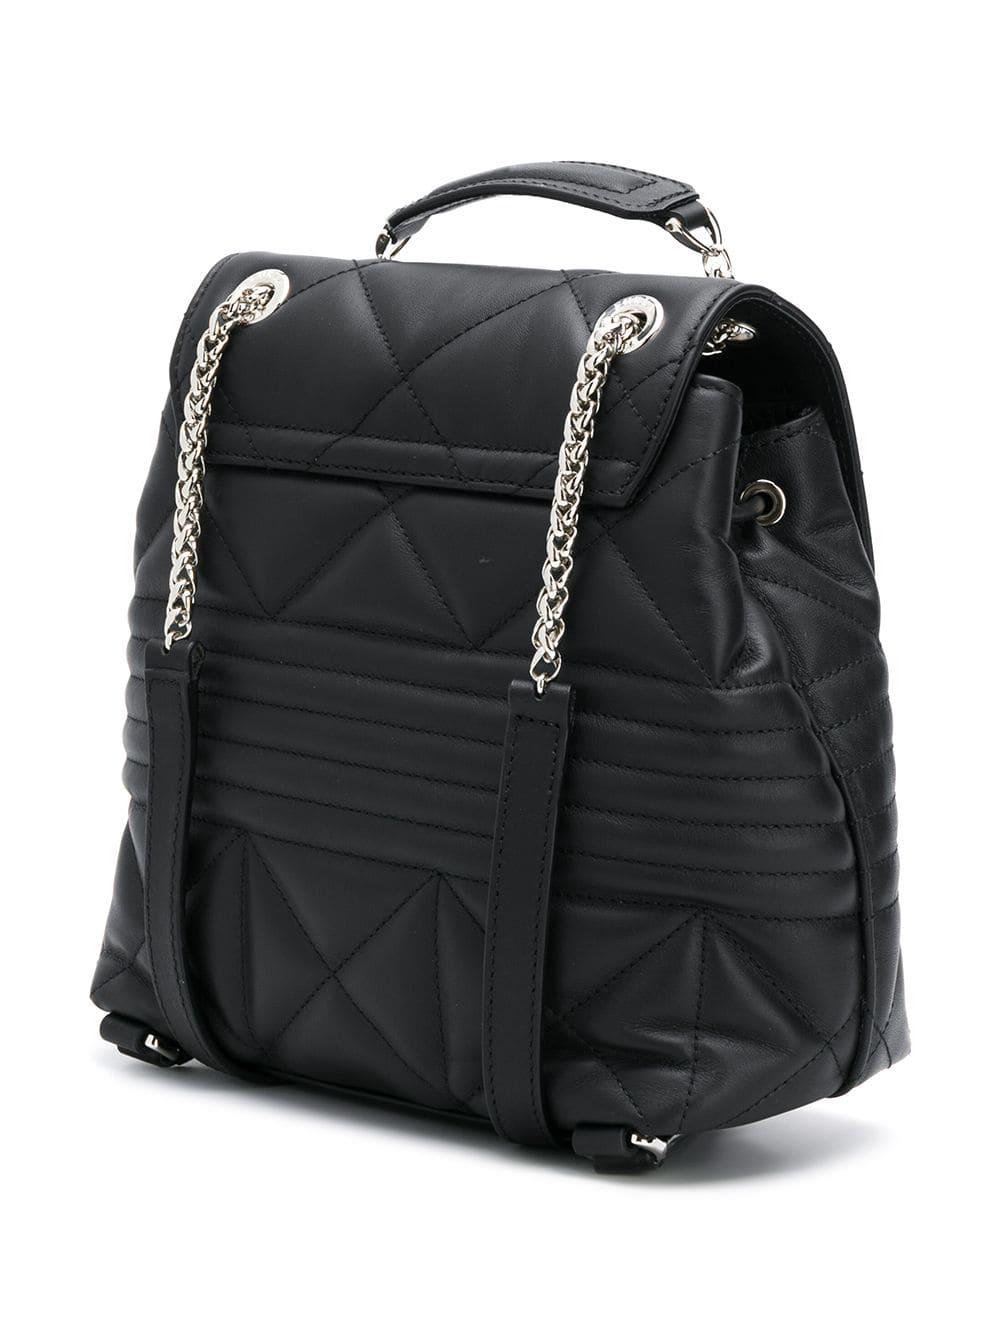 Furla Leather Mini Functional Backpack in Black - Lyst